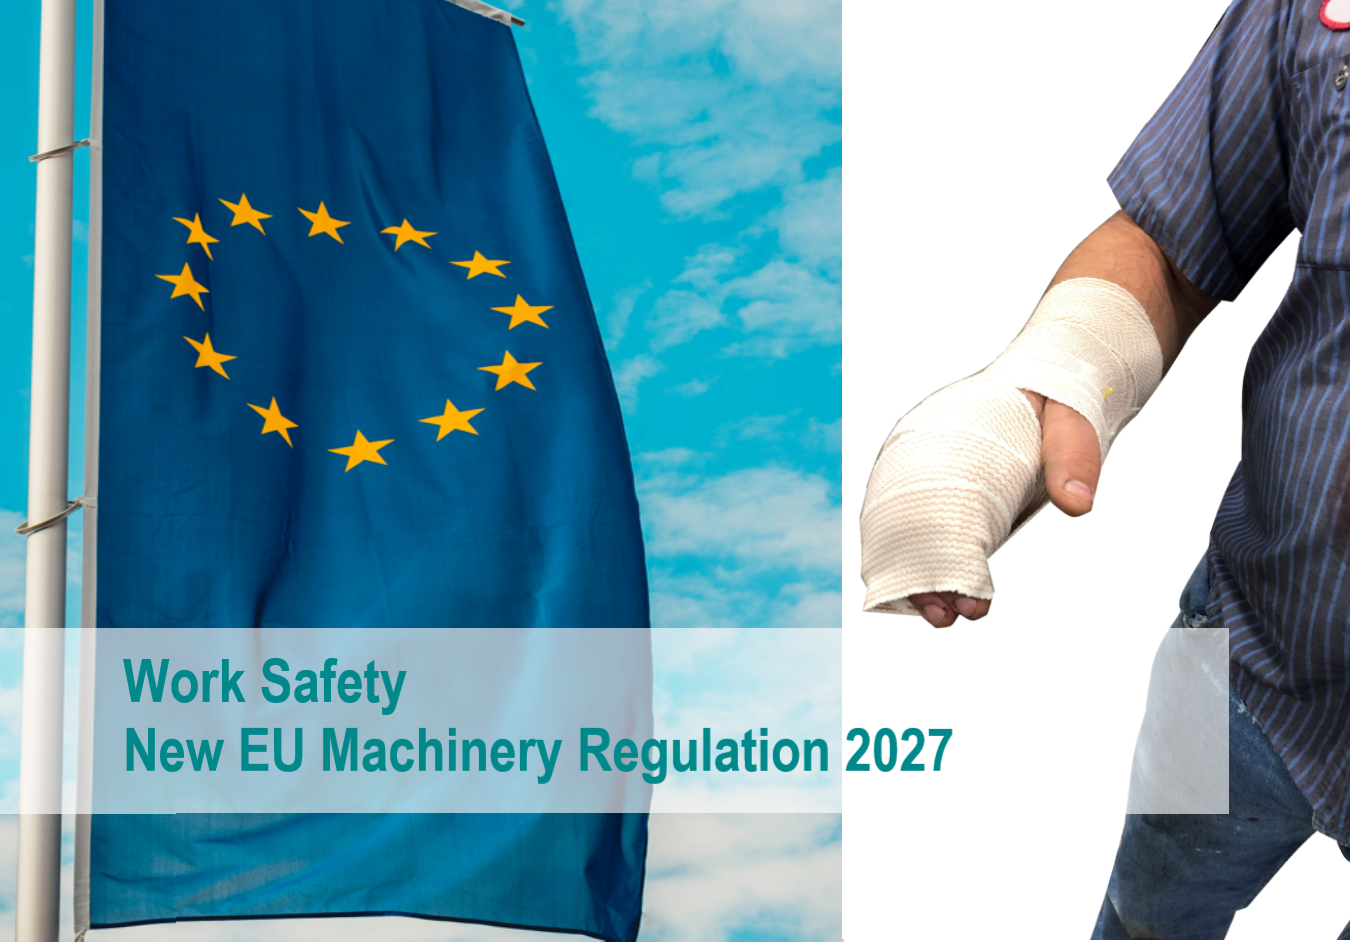 The Challenge of the New EU-Machinery Regulation